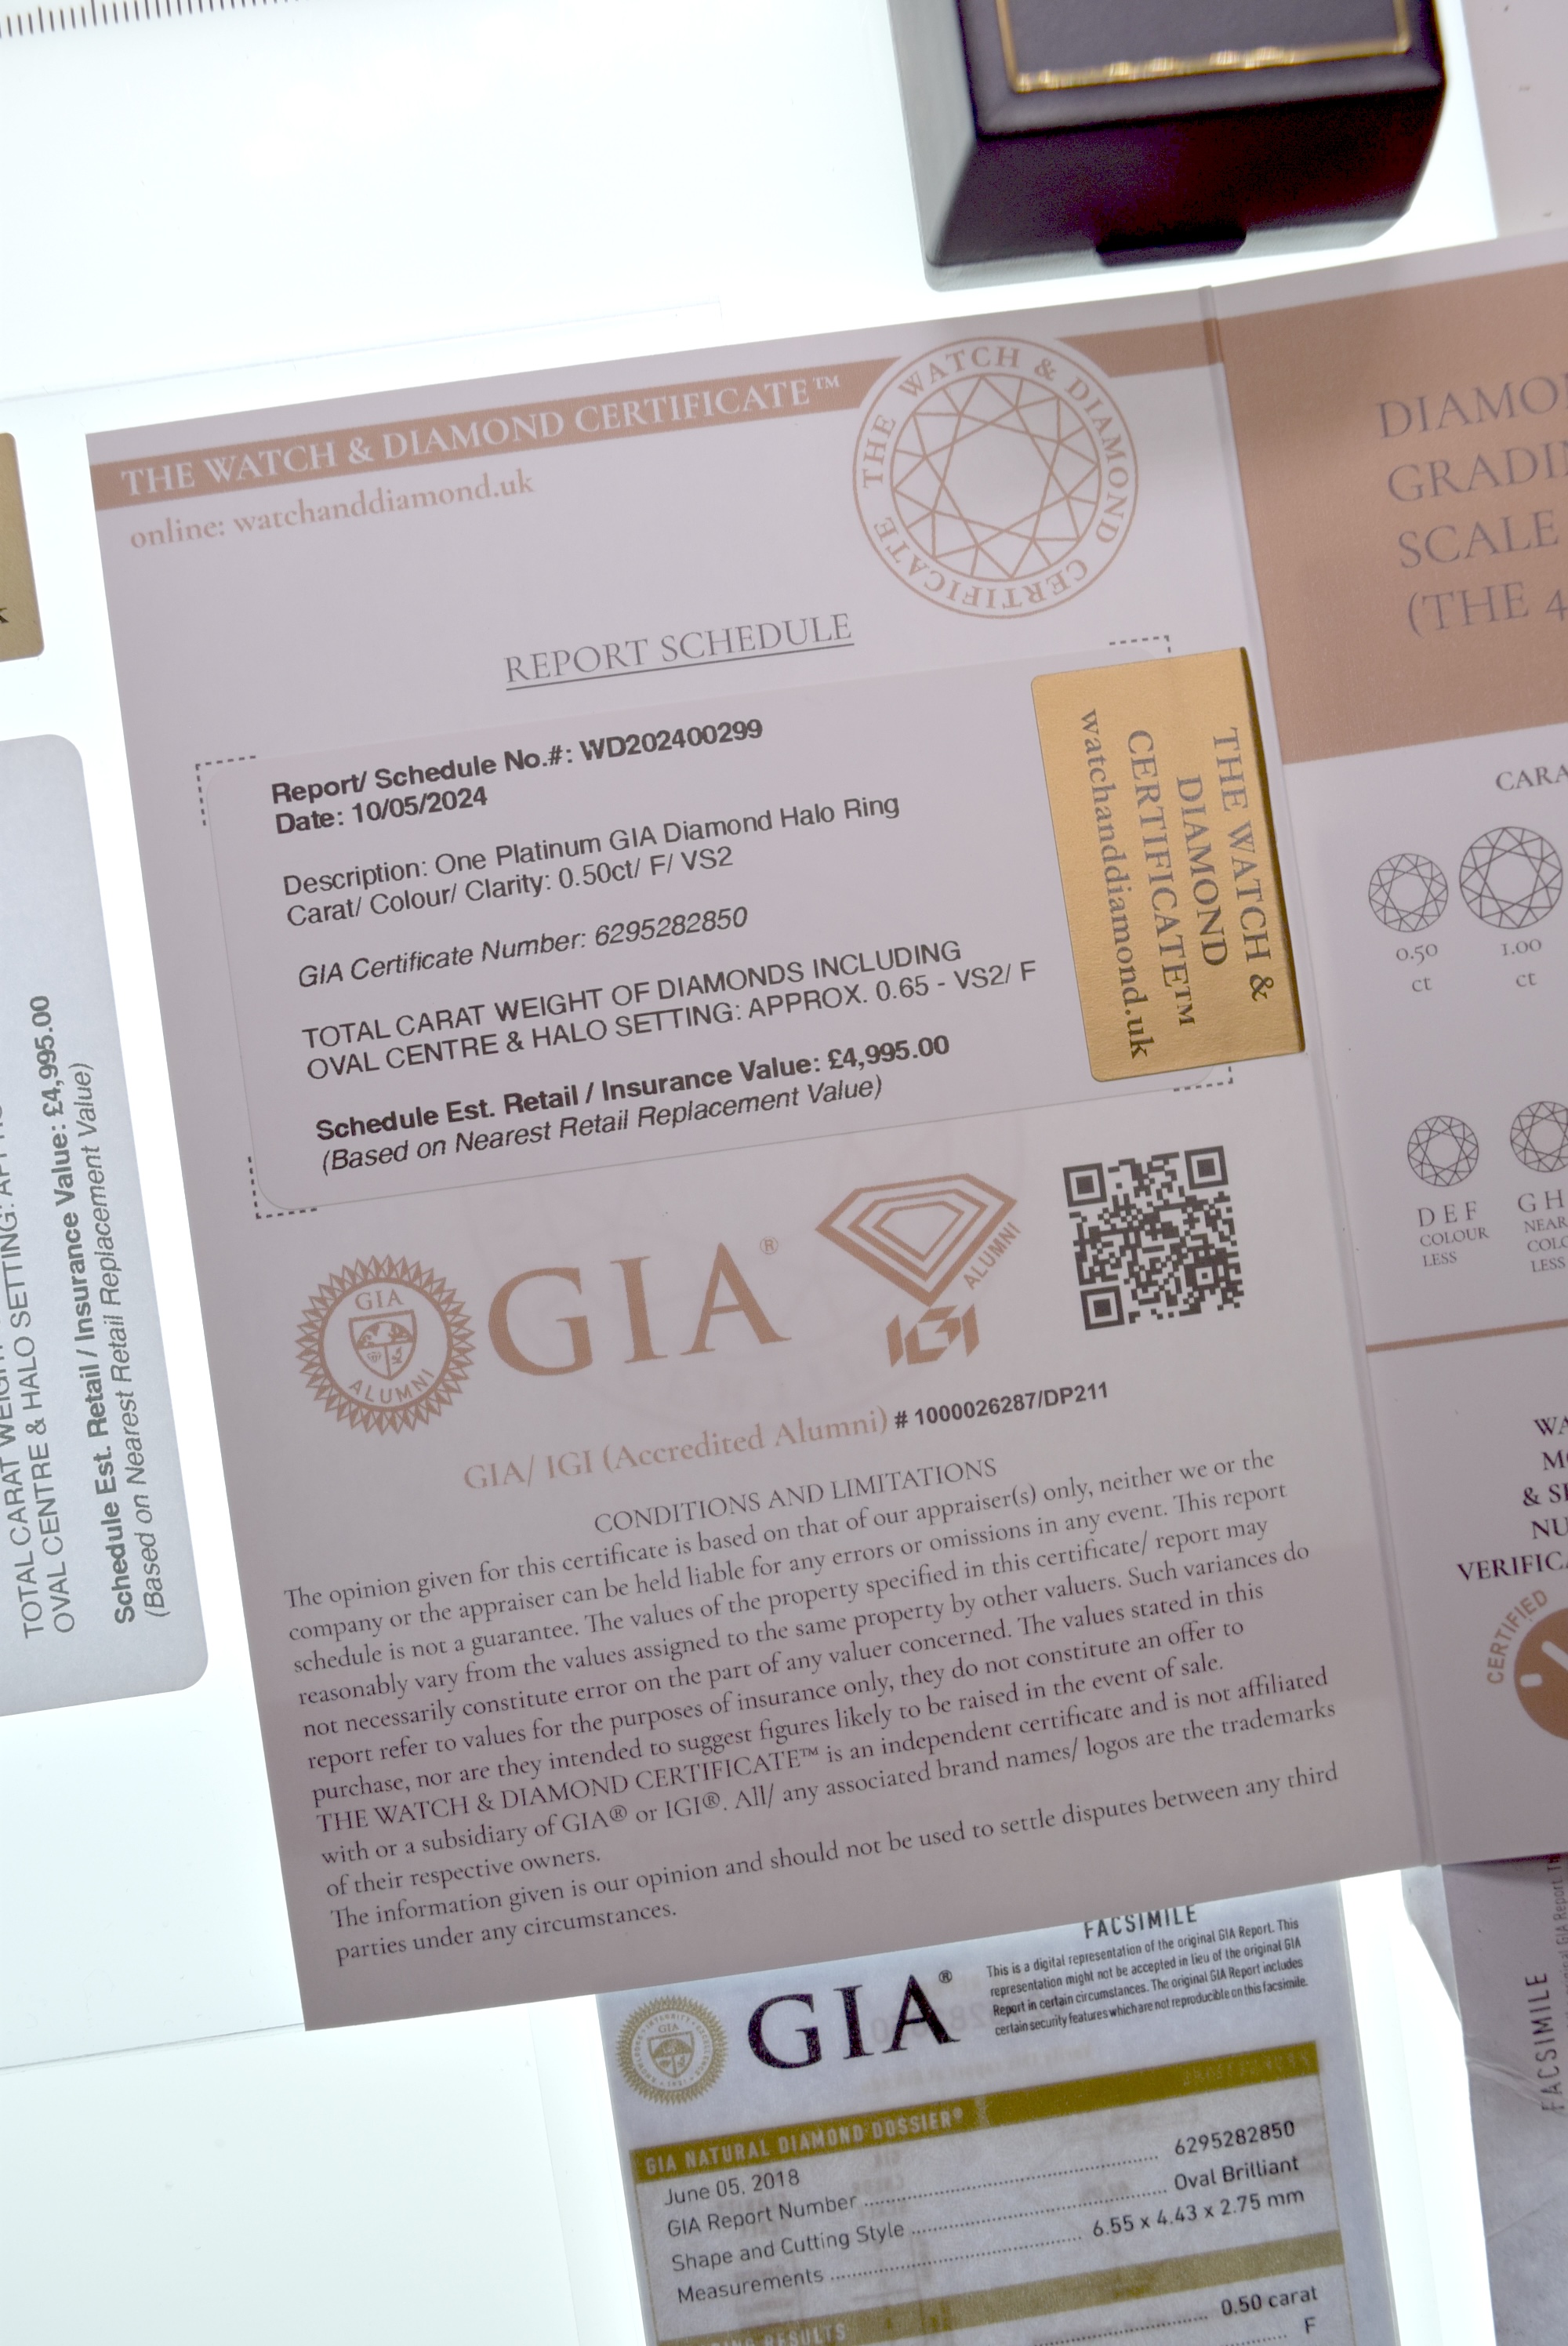 GIA DIAMOND PLATINUM HALO OVAL RING - WITH GIA DIAMOND DOSSIER CERT/ £4,995.00 VALUATION & BOX - Image 14 of 14